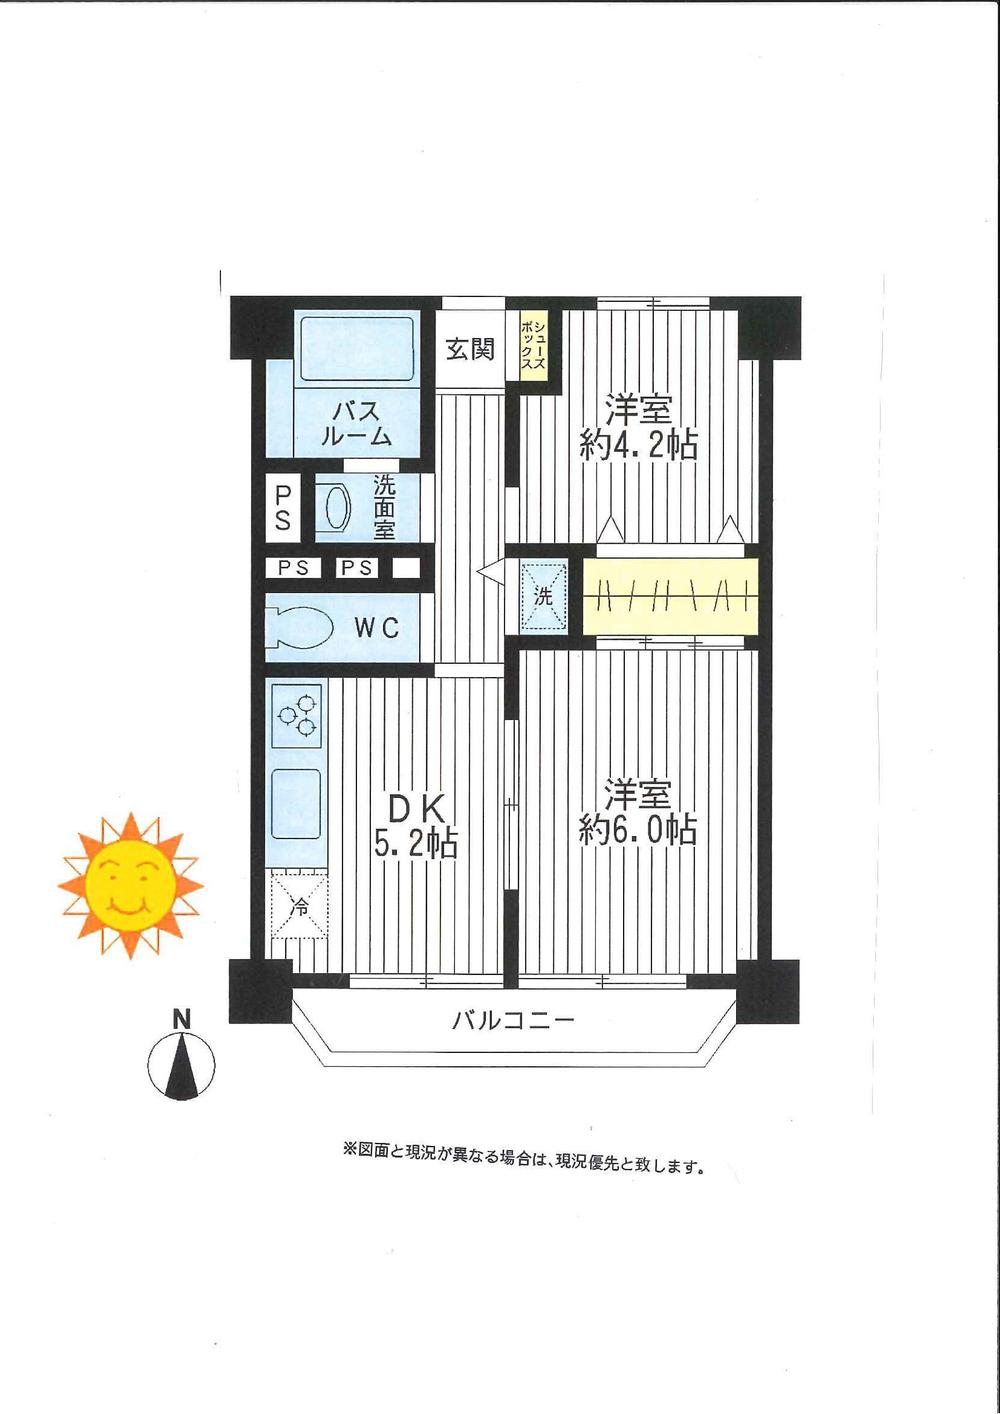 Floor plan. 2DK, Price 20.8 million yen, Footprint 40.5 sq m , Balcony area 4.5 sq m